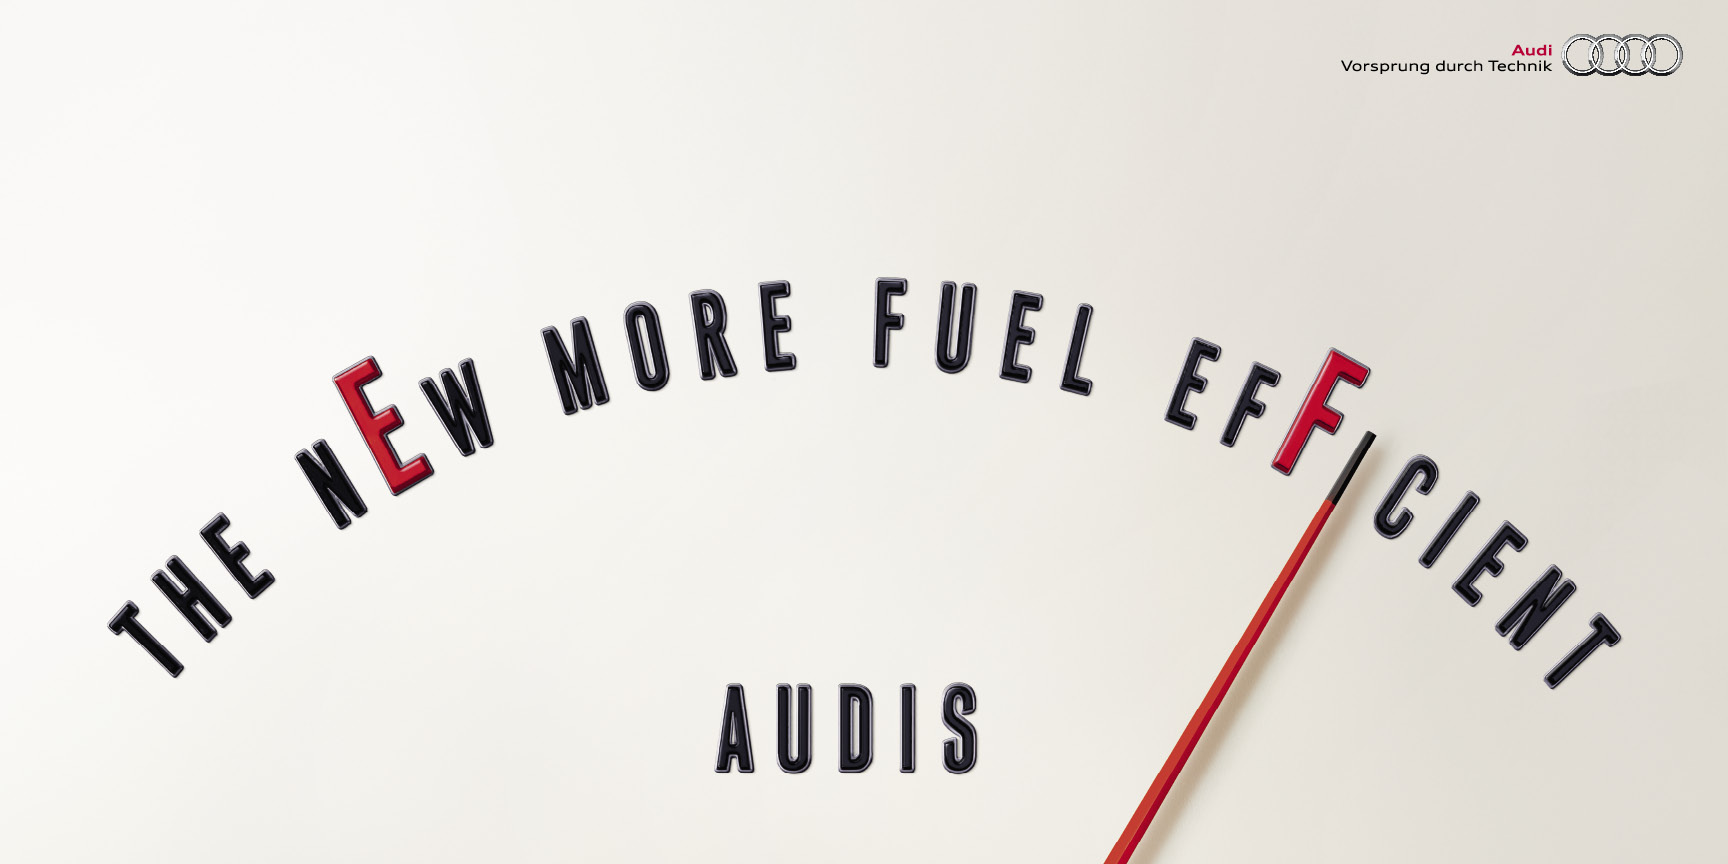 Audi fuel efficient ad / gauge